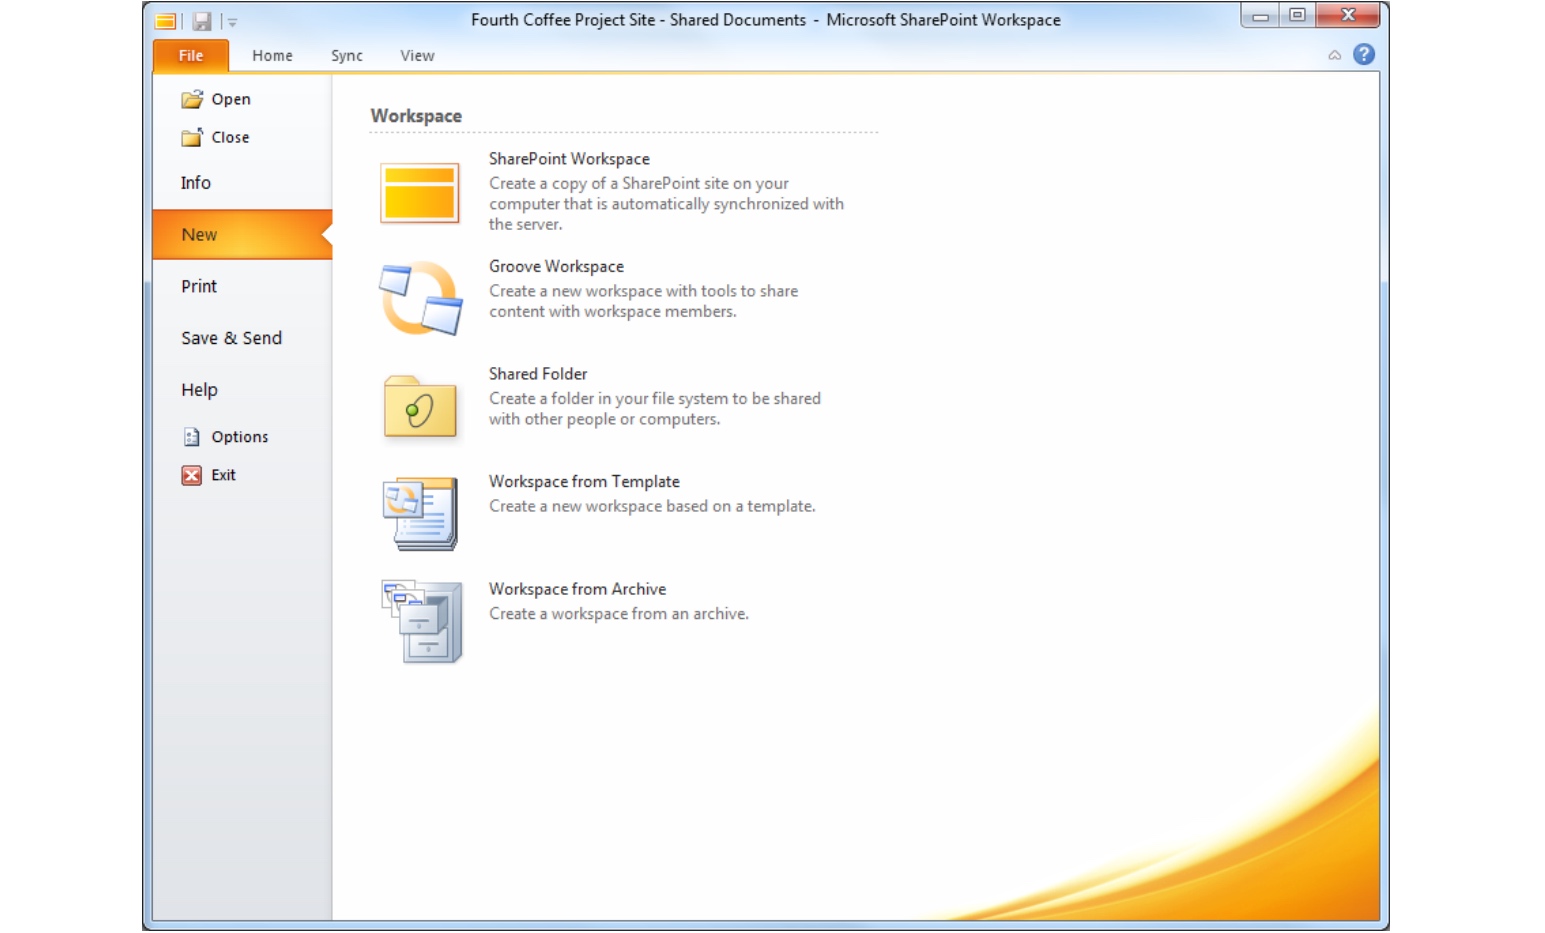 Microsoft SharePoint Workspace 2010 Start Screen (2010)